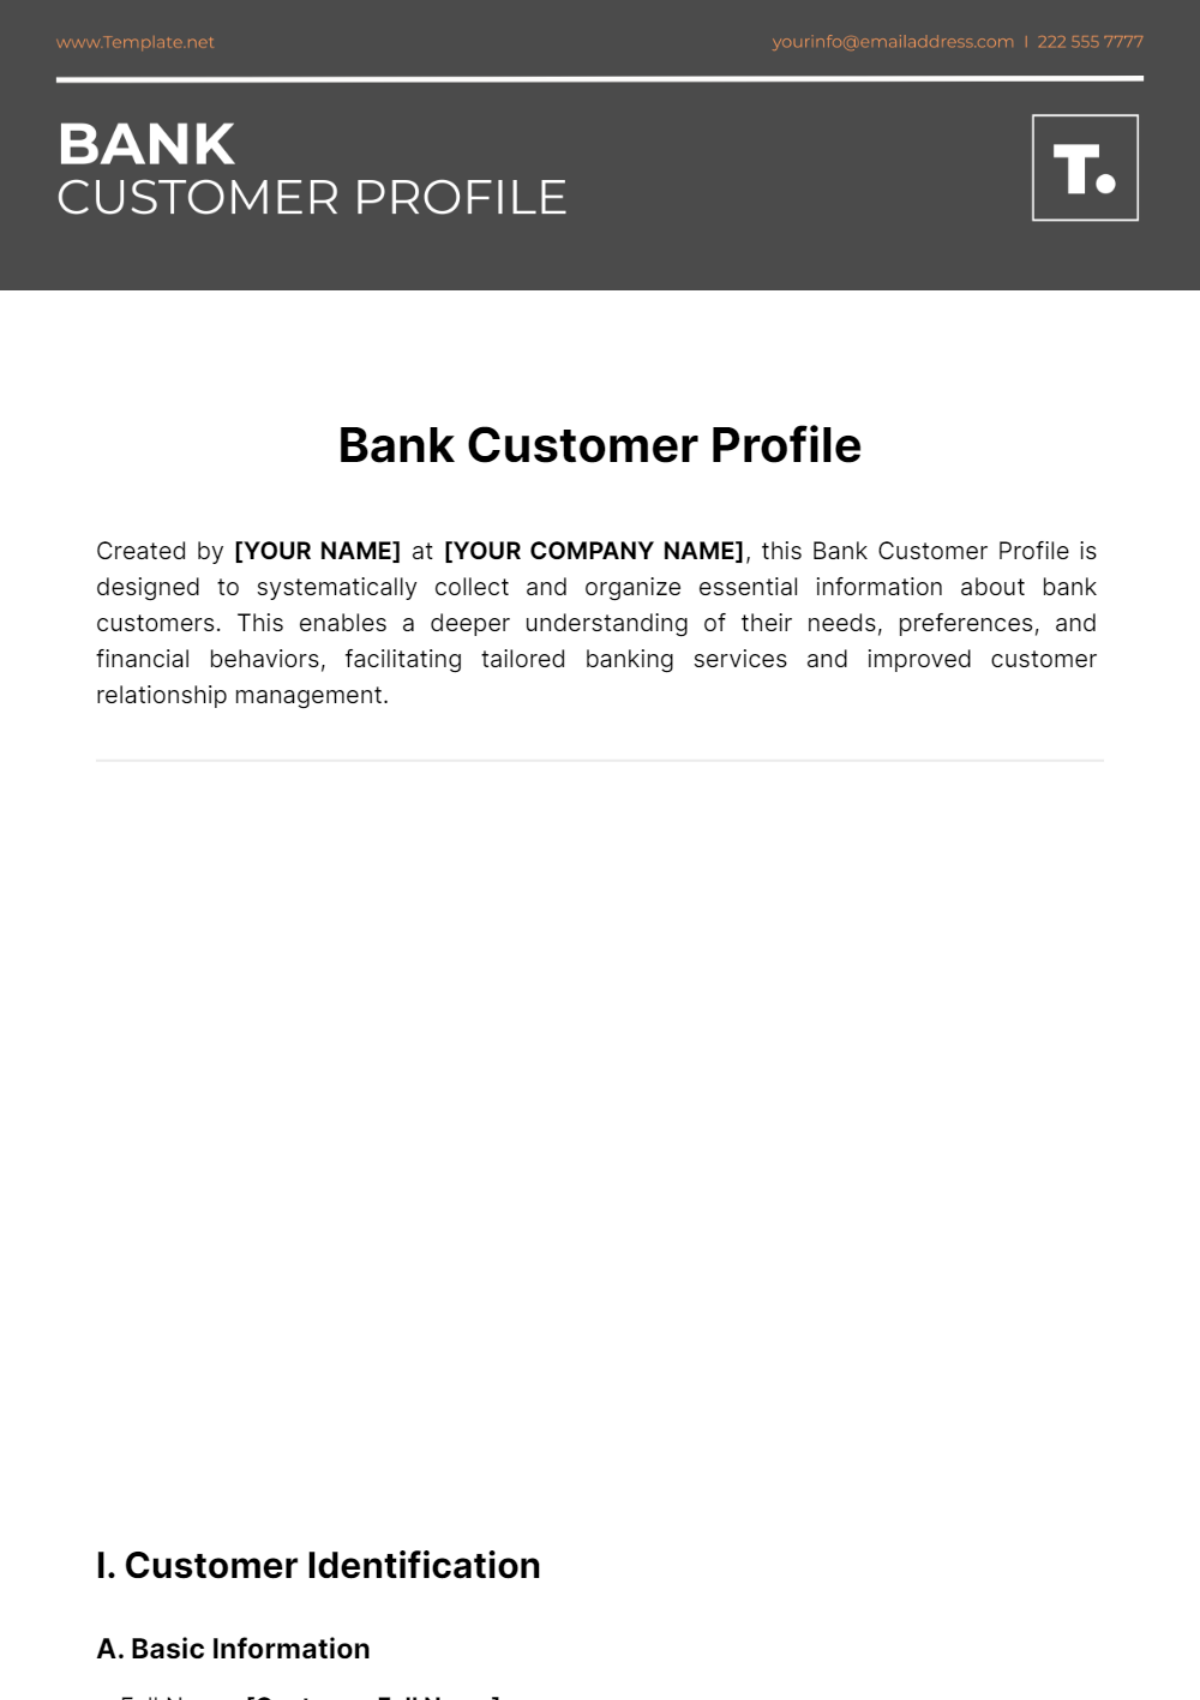 Bank Customer Profile Template